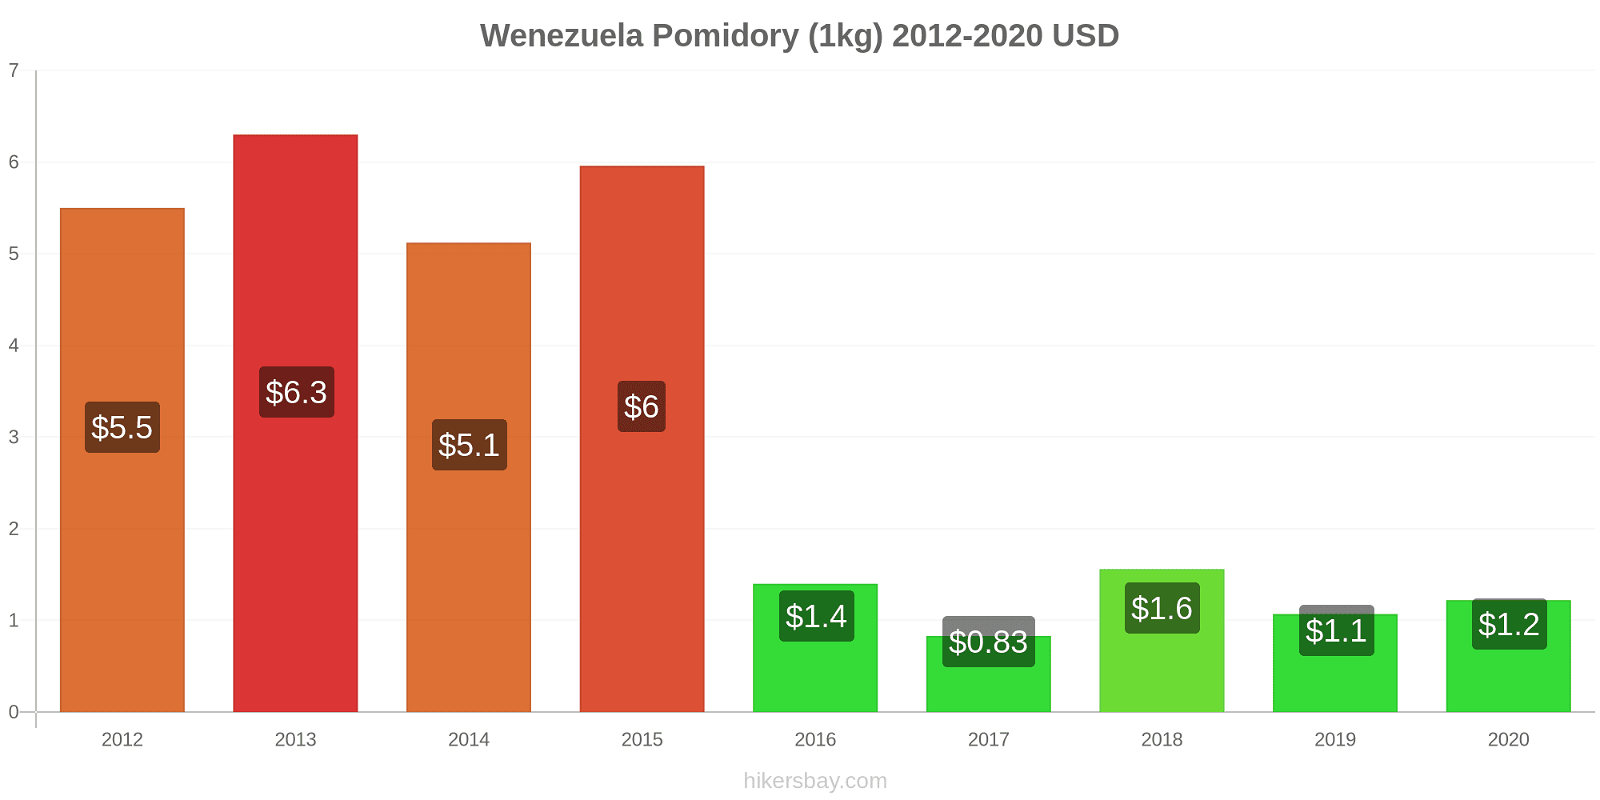 Wenezuela zmiany cen Pomidory (1kg) hikersbay.com